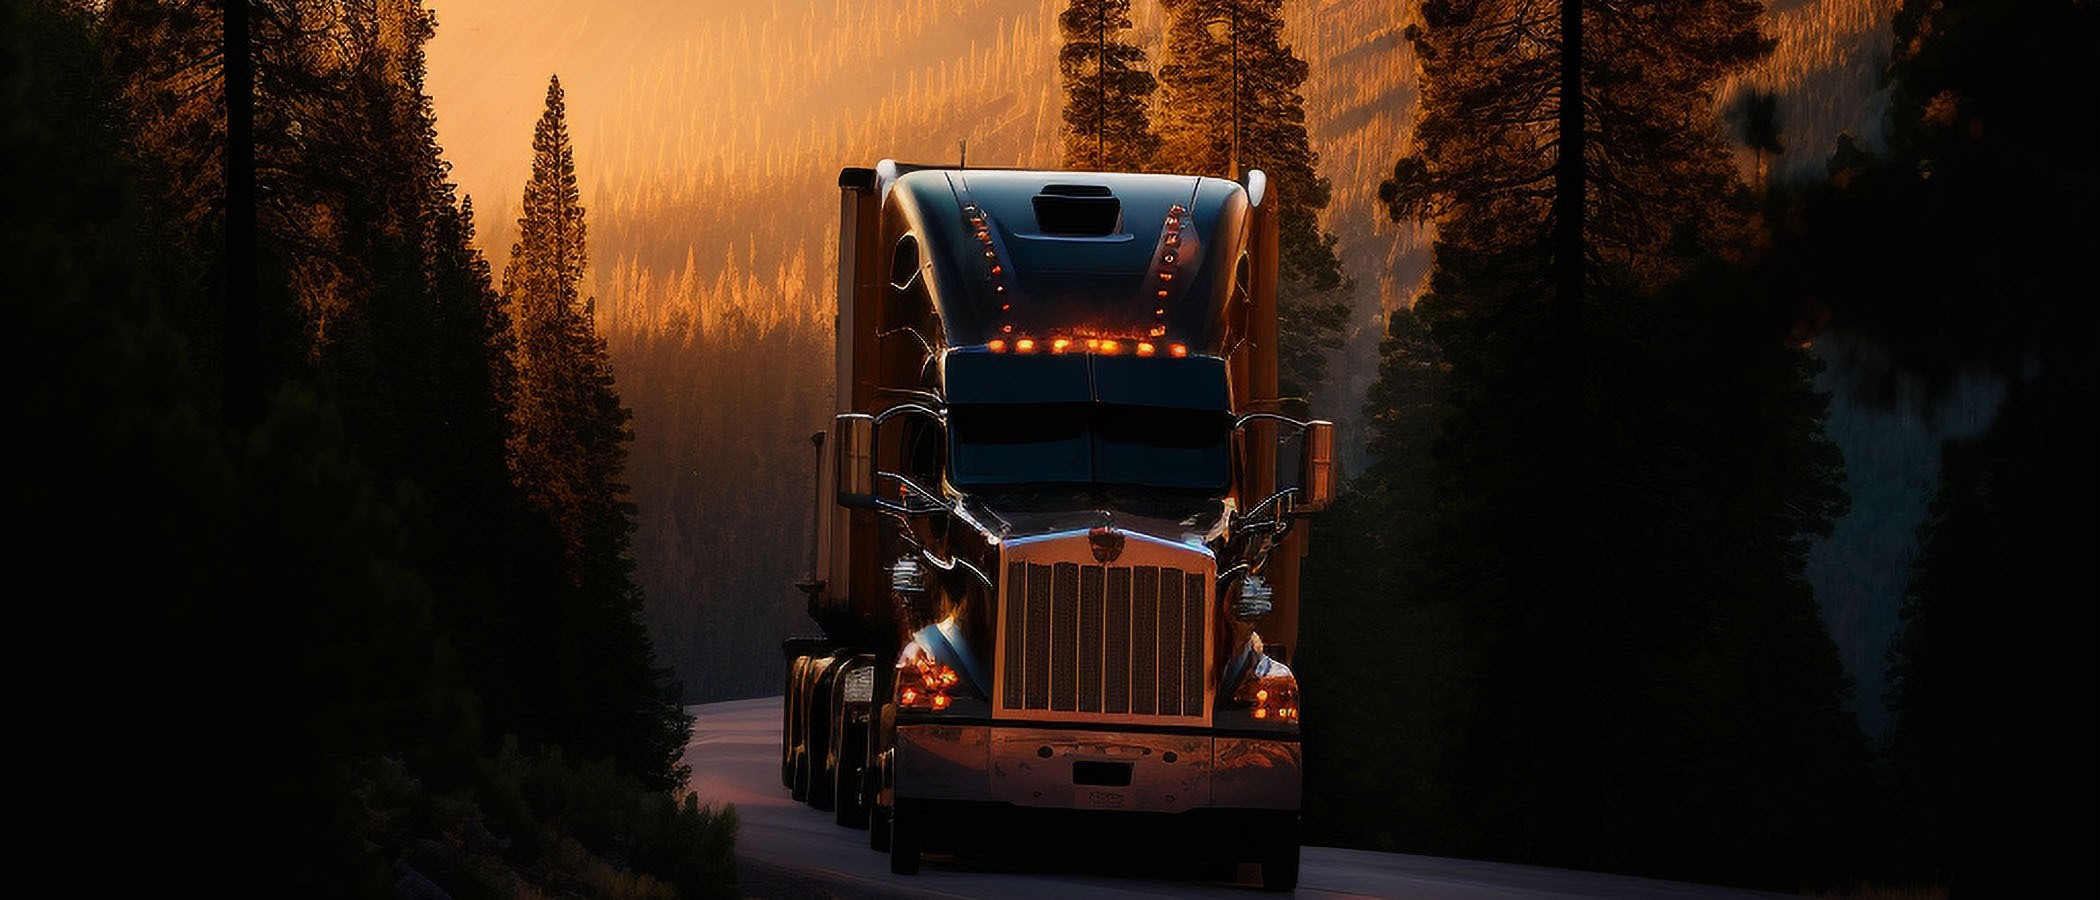  Truck Driving Essentials Parking the Log Truck Driver